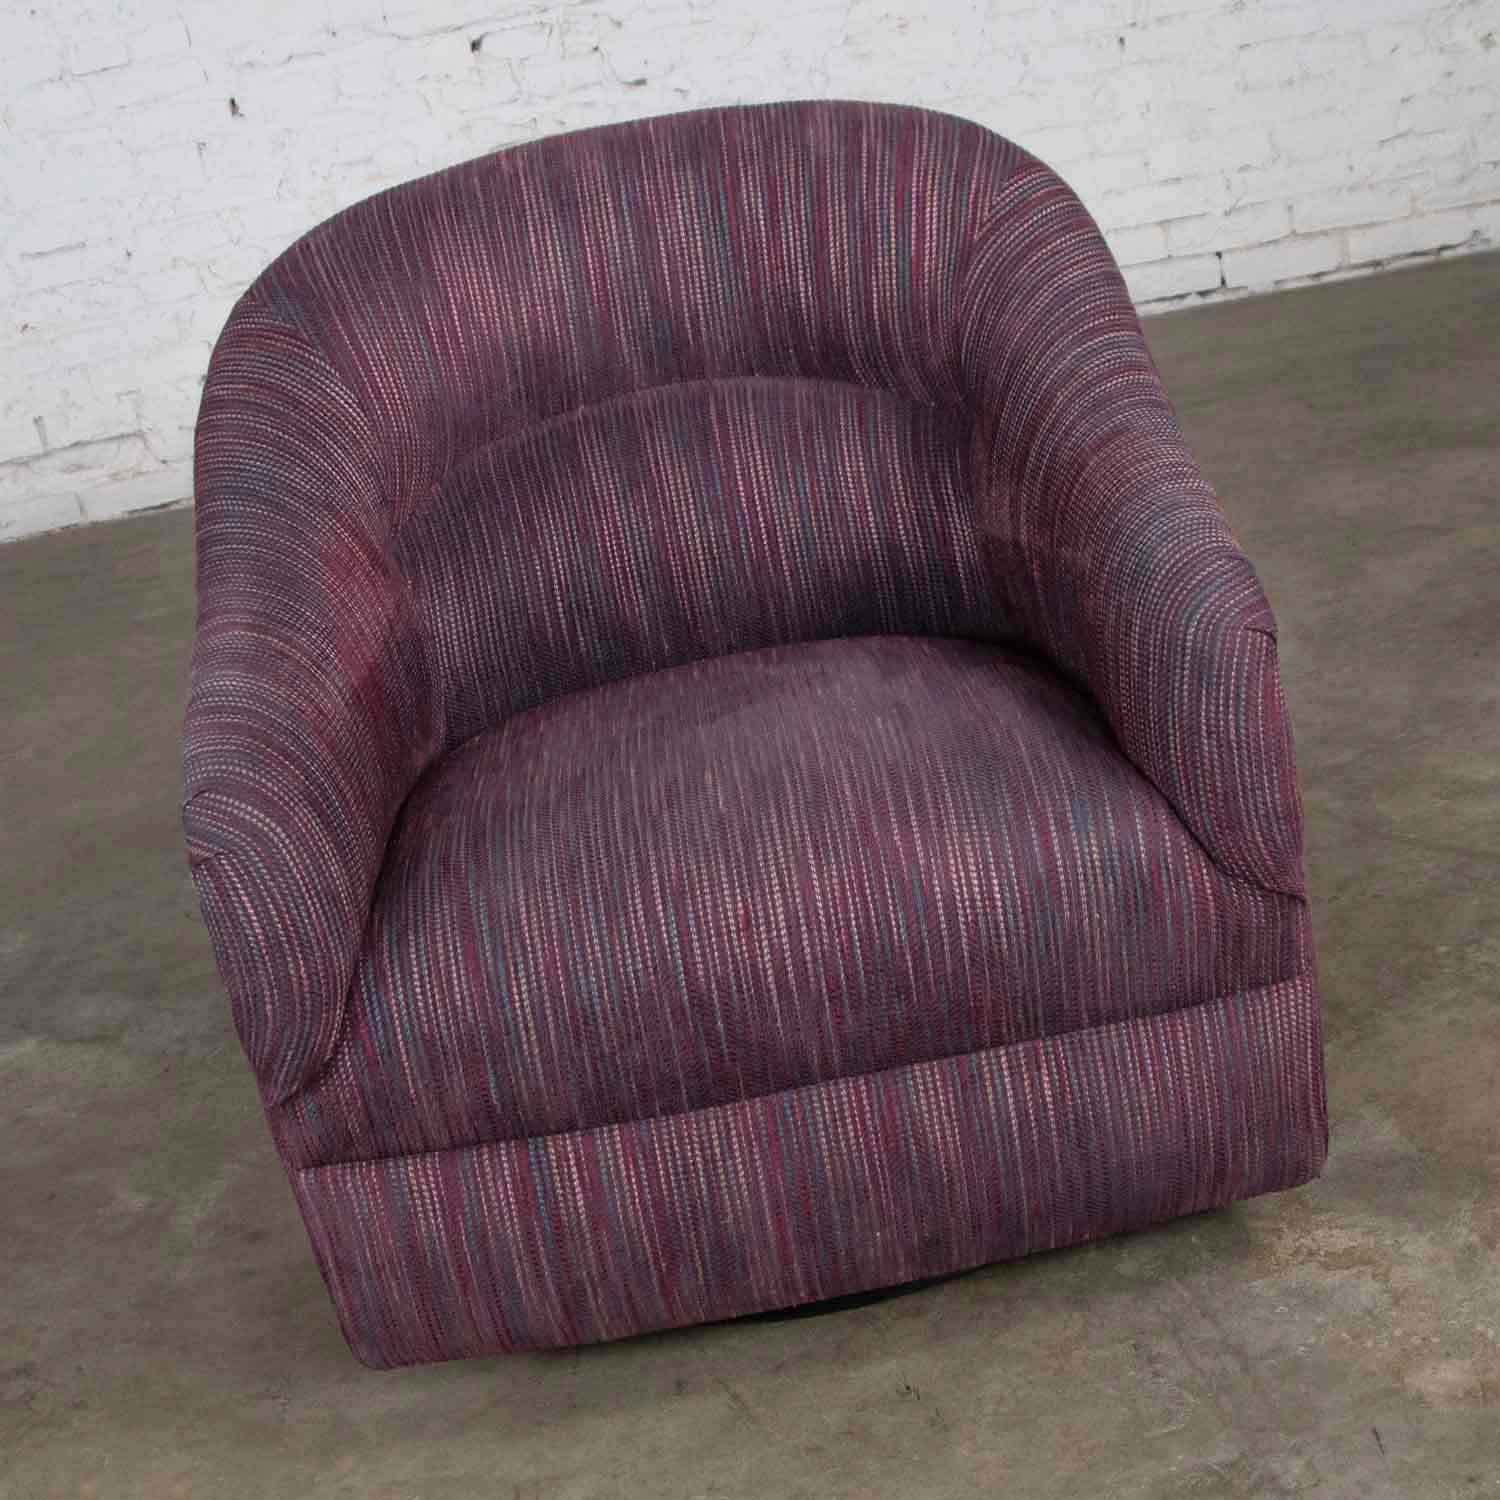 Vintage Modern Tub Shaped Swivel Rocking Chair in Eggplant Purple Upholstery